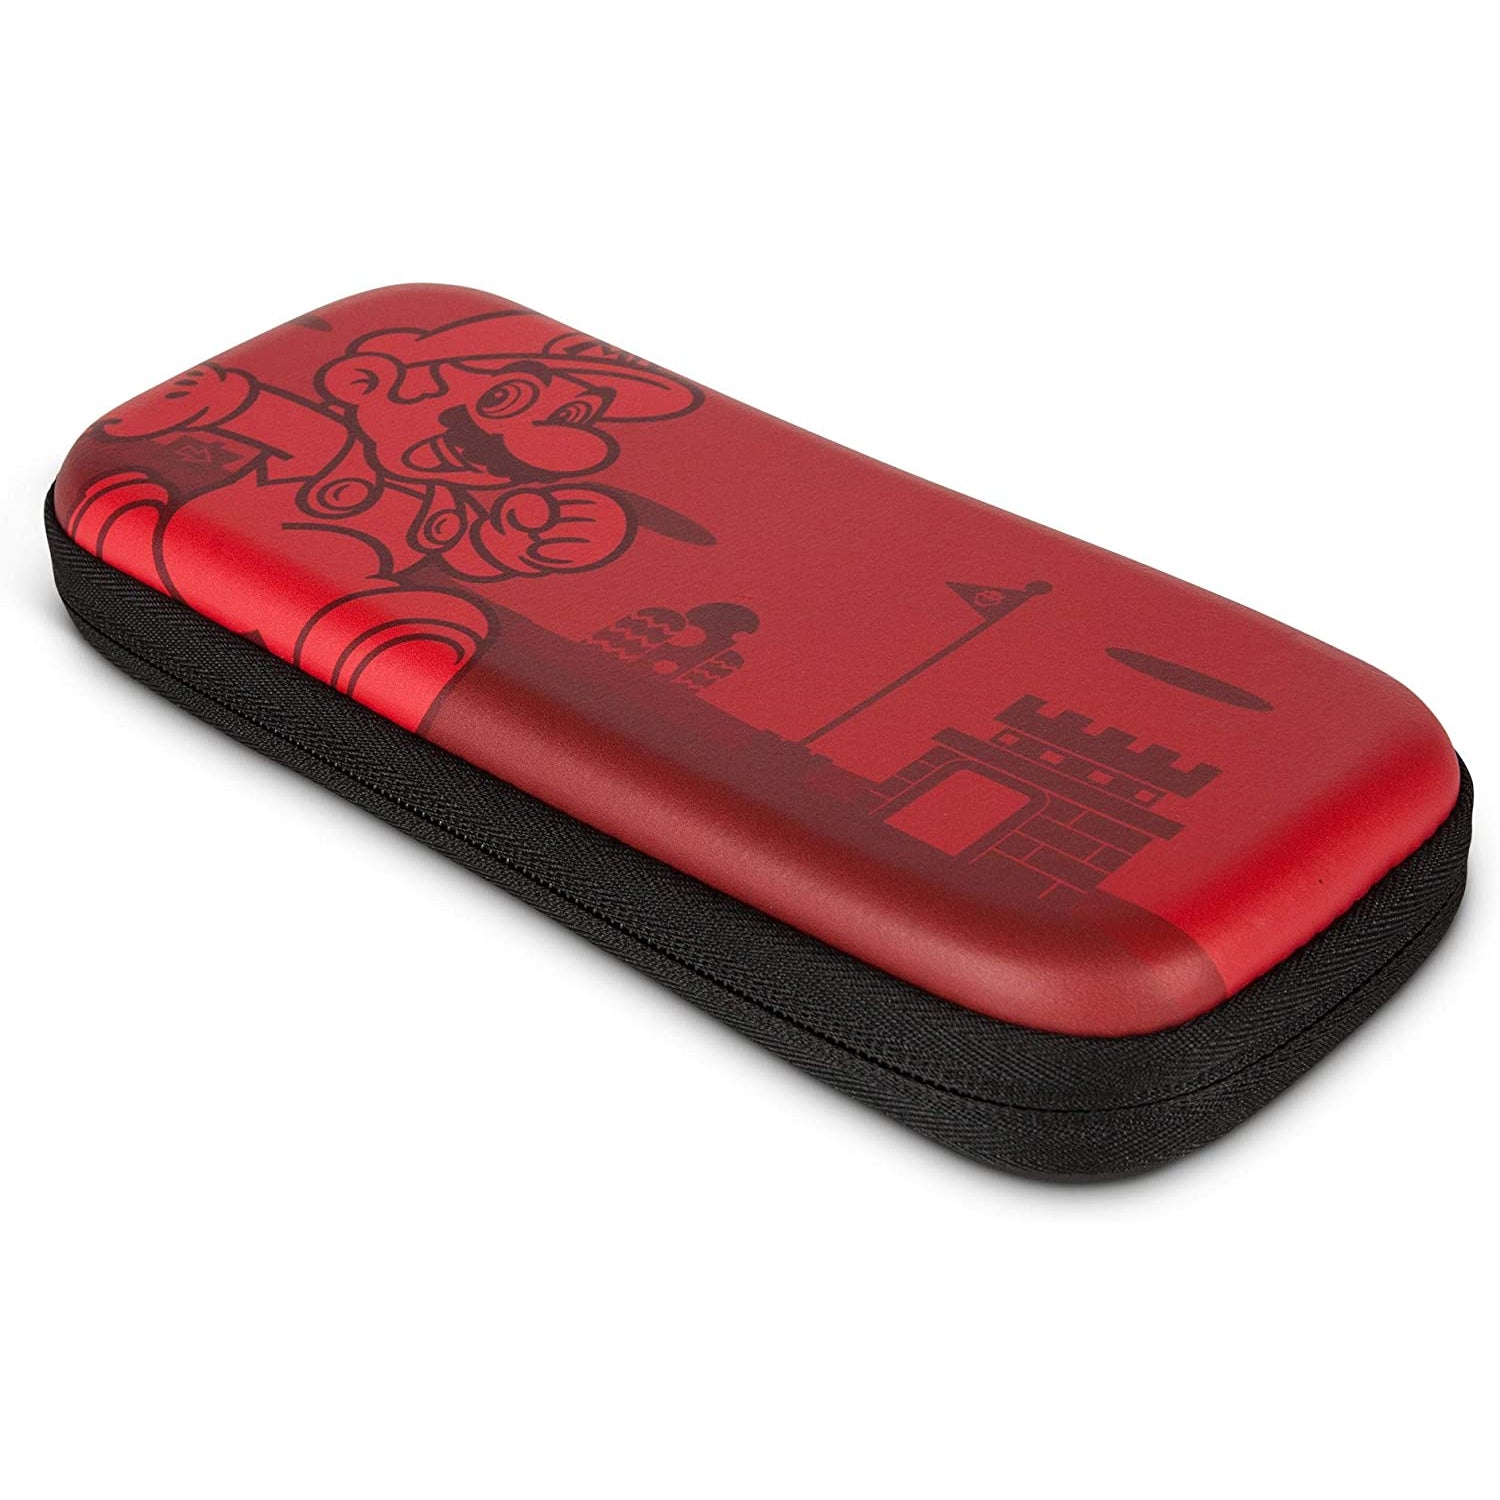 PowerA Stealth Case Kit for Nintendo Switch (Super Mario)